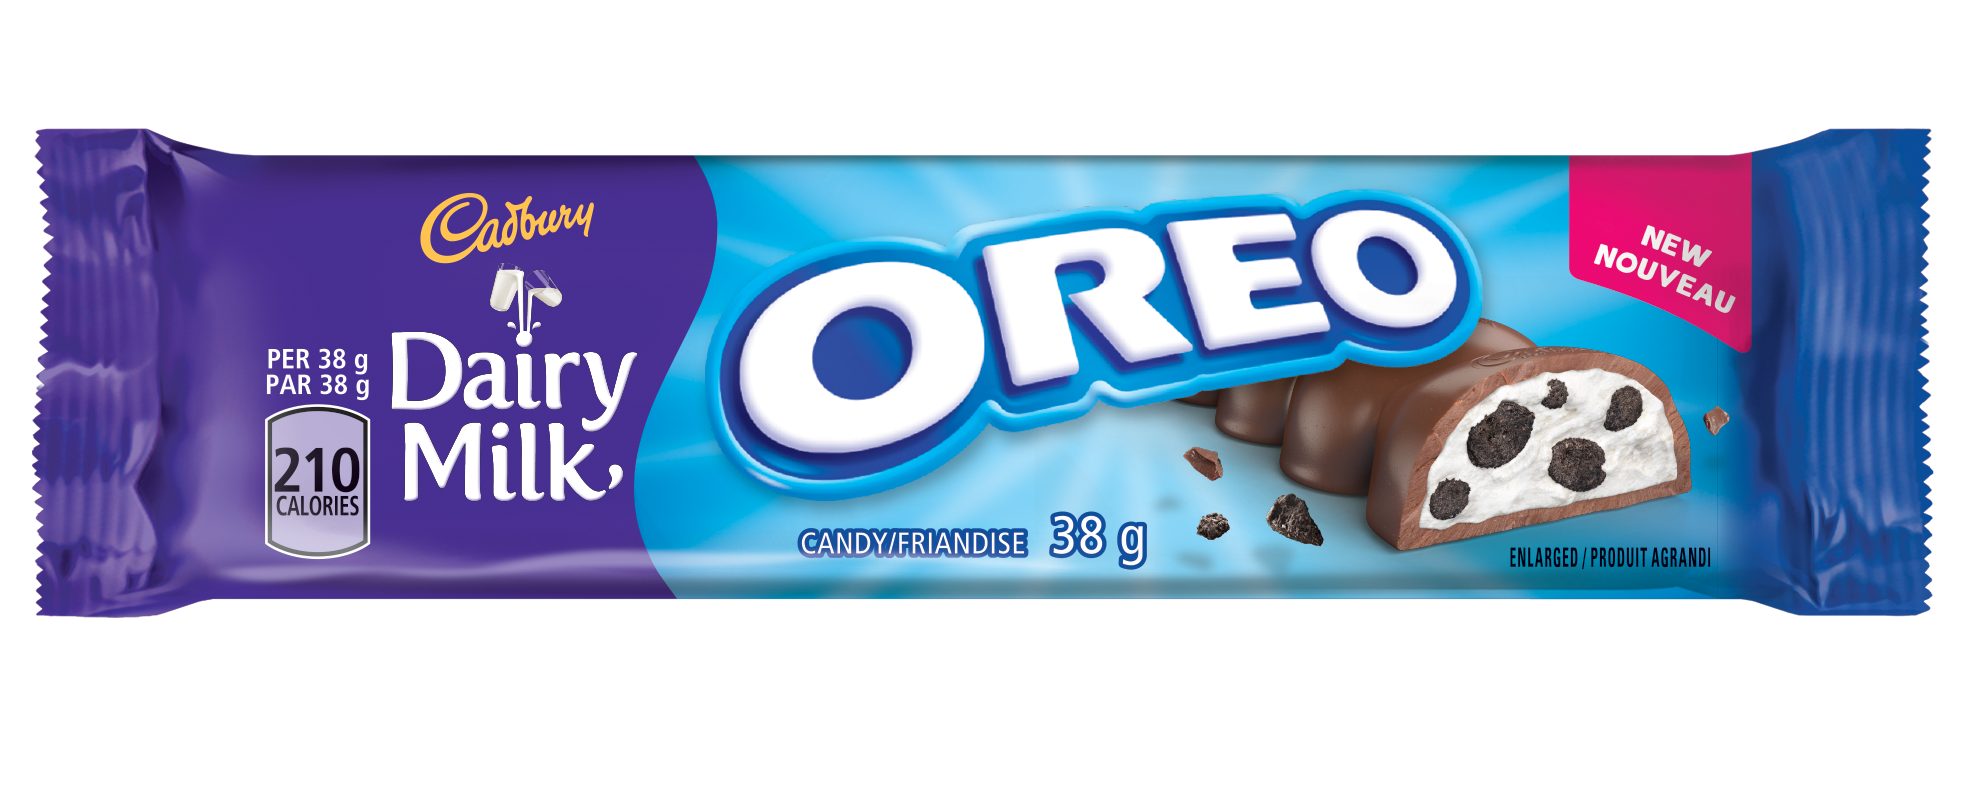 Cadbury Dairy Milk OREO, tablette de 38 g-1